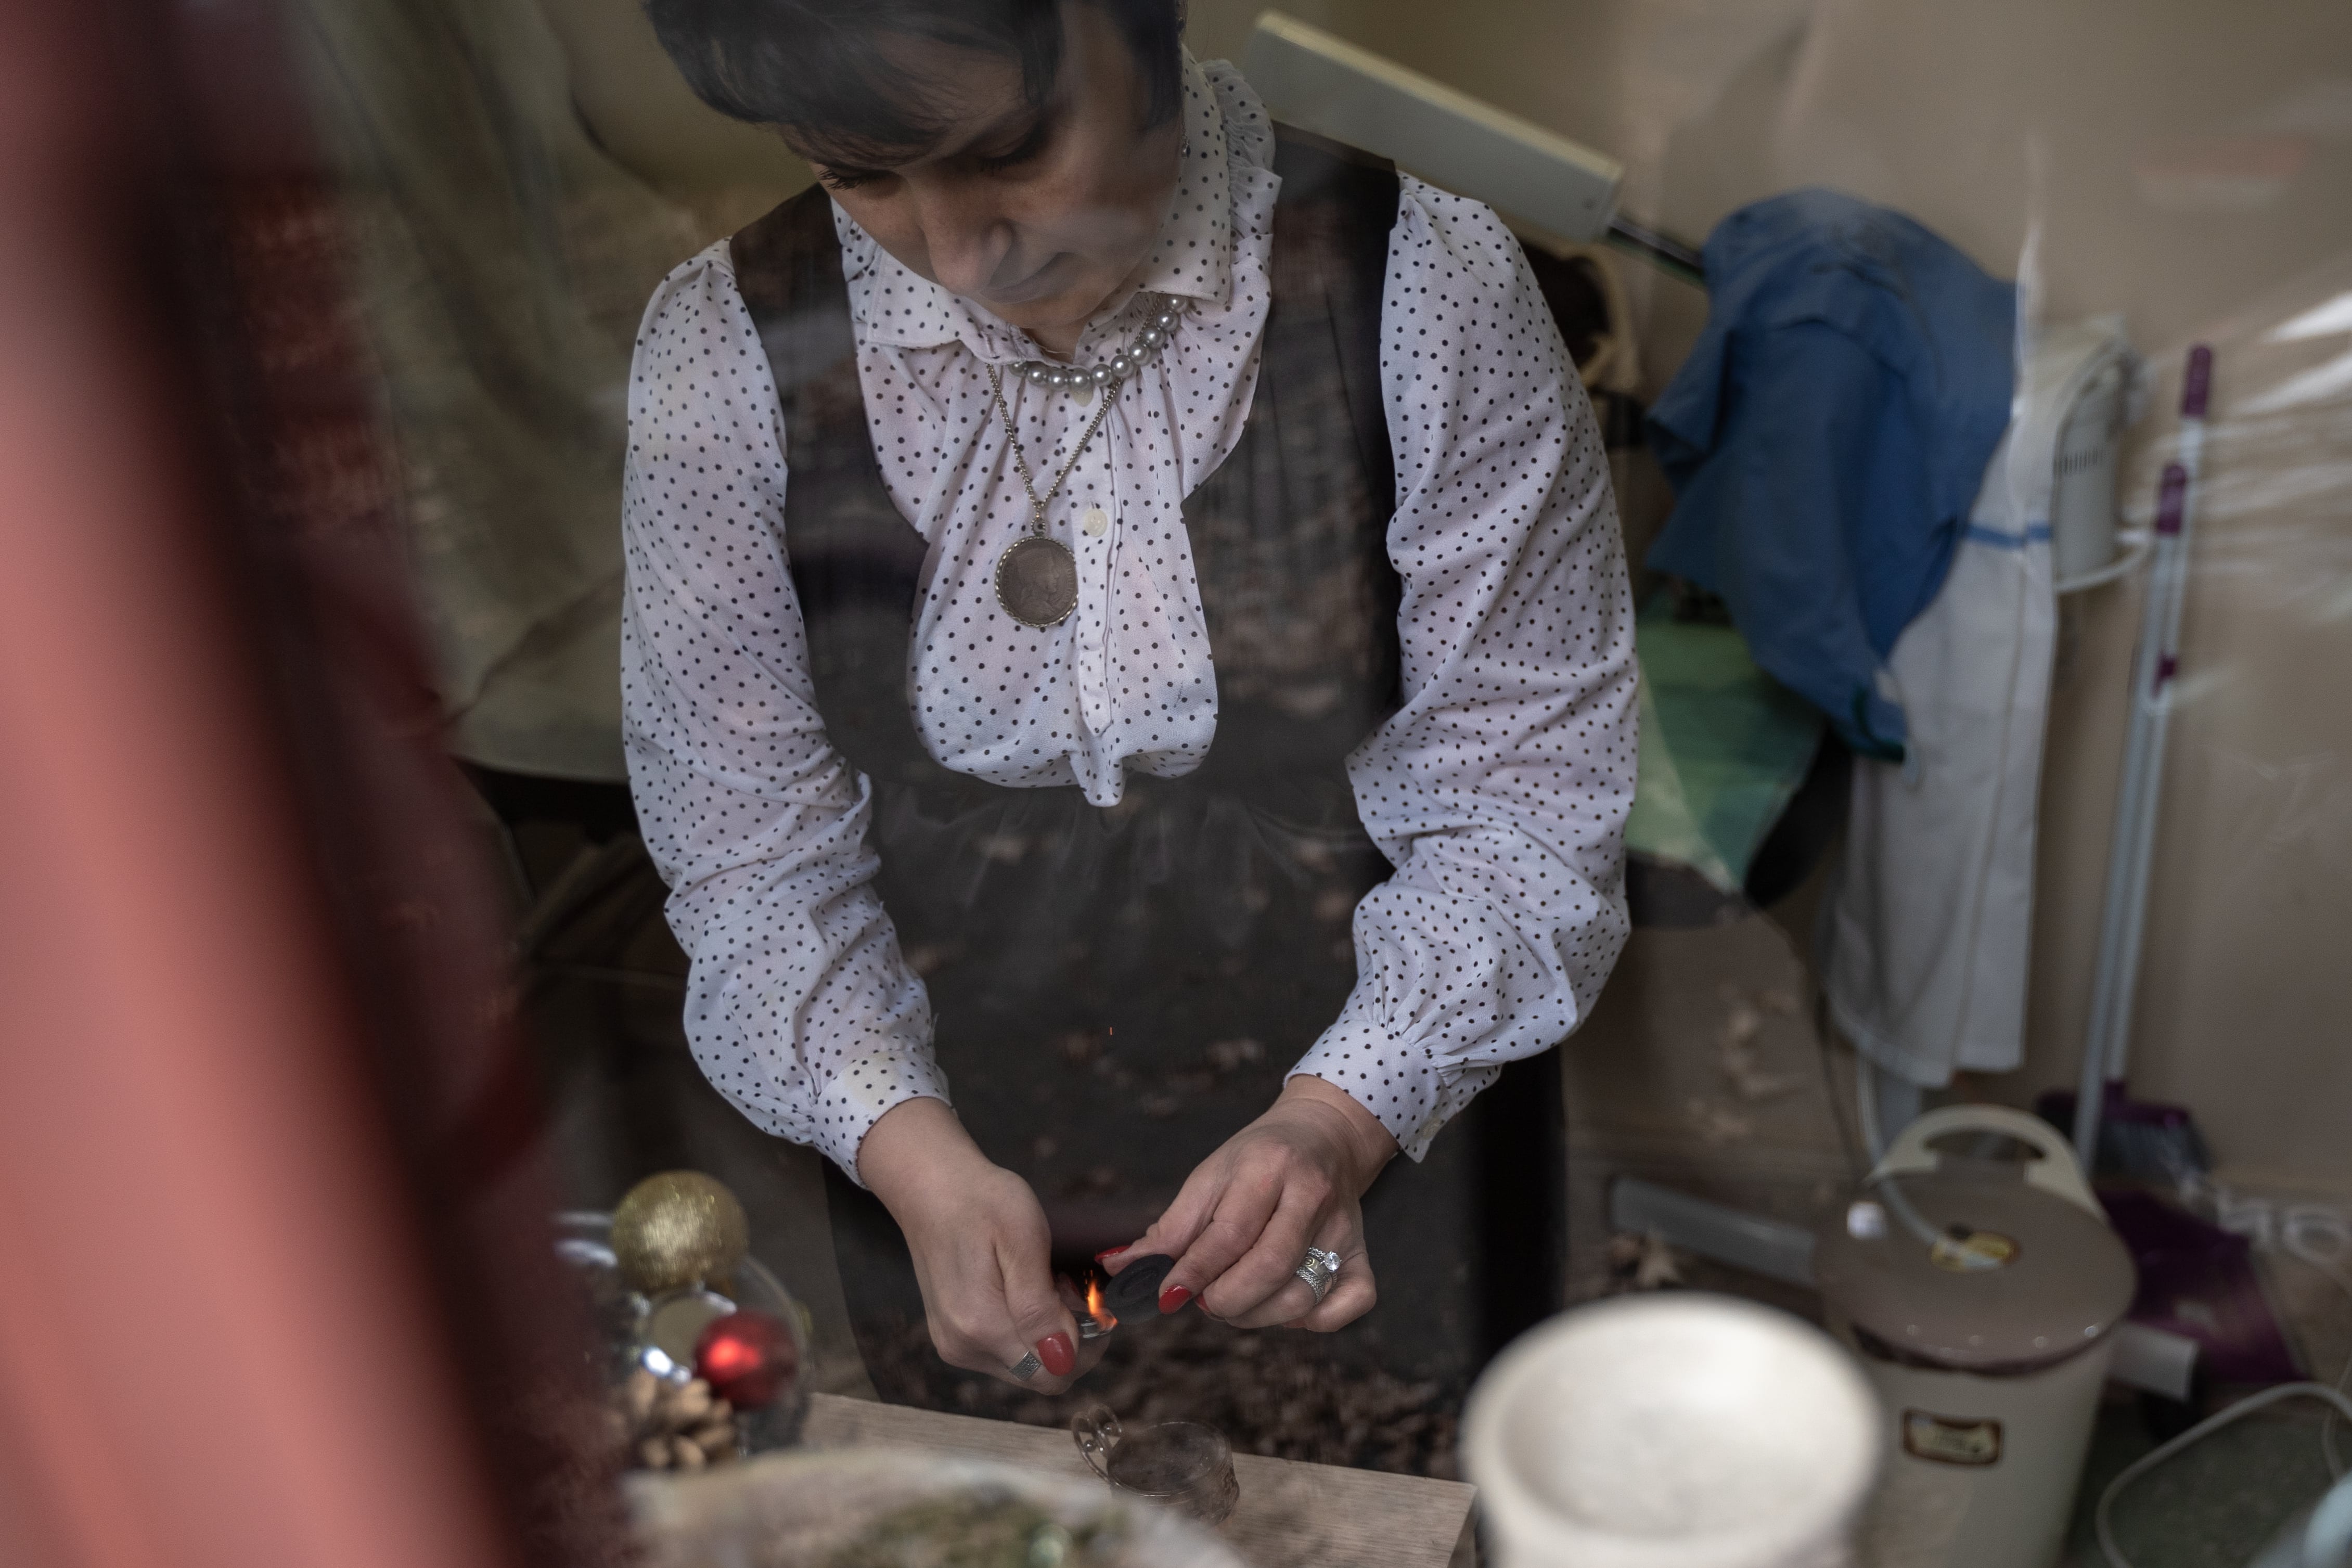 Taguhi has a side business making handcrafts. She sells them via social media.